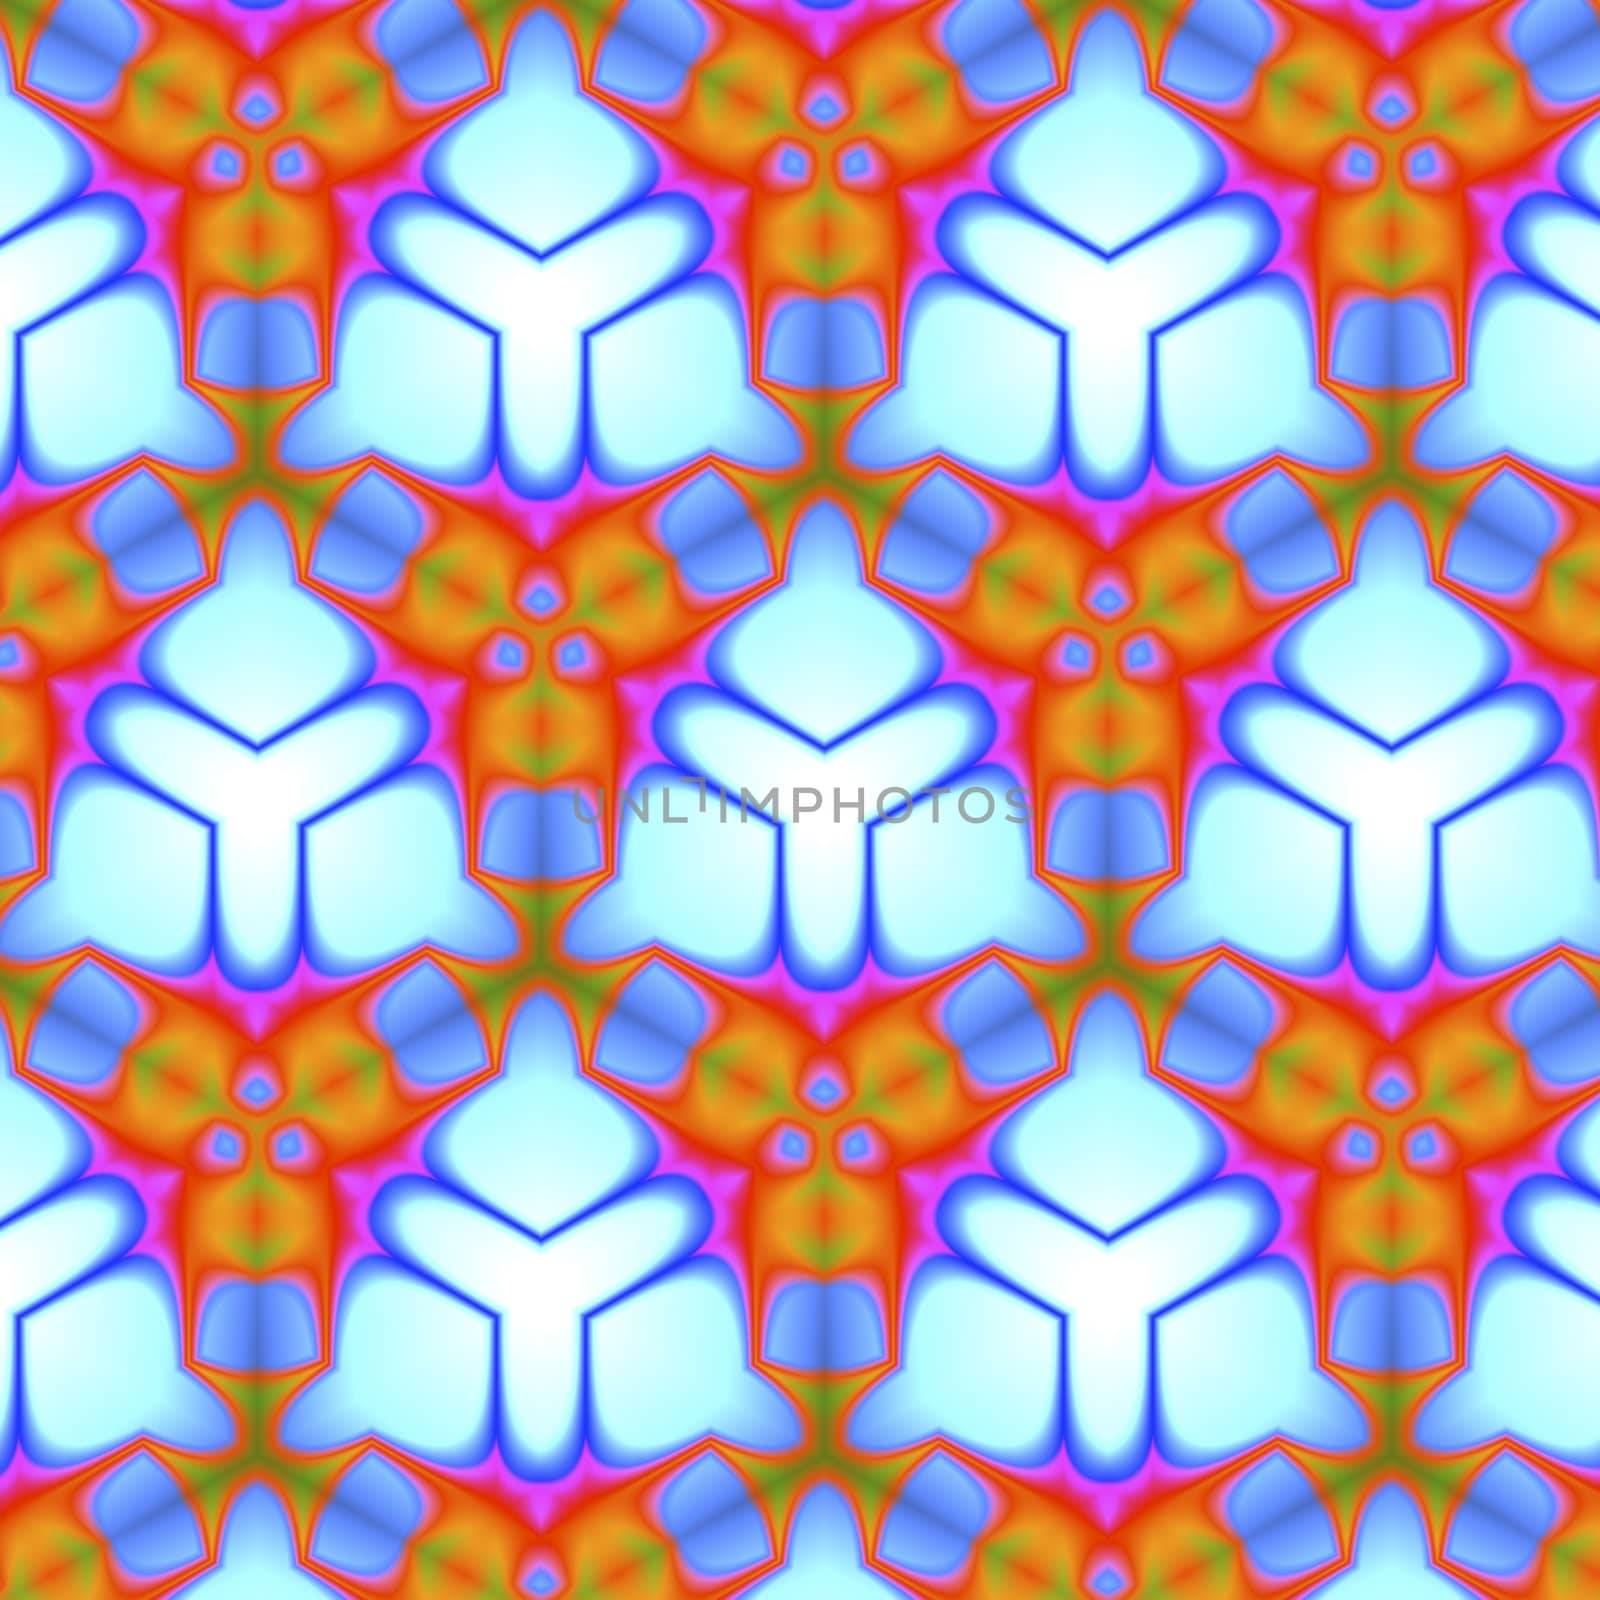 Blue and Orange Triangular Tile Pattern by patballard